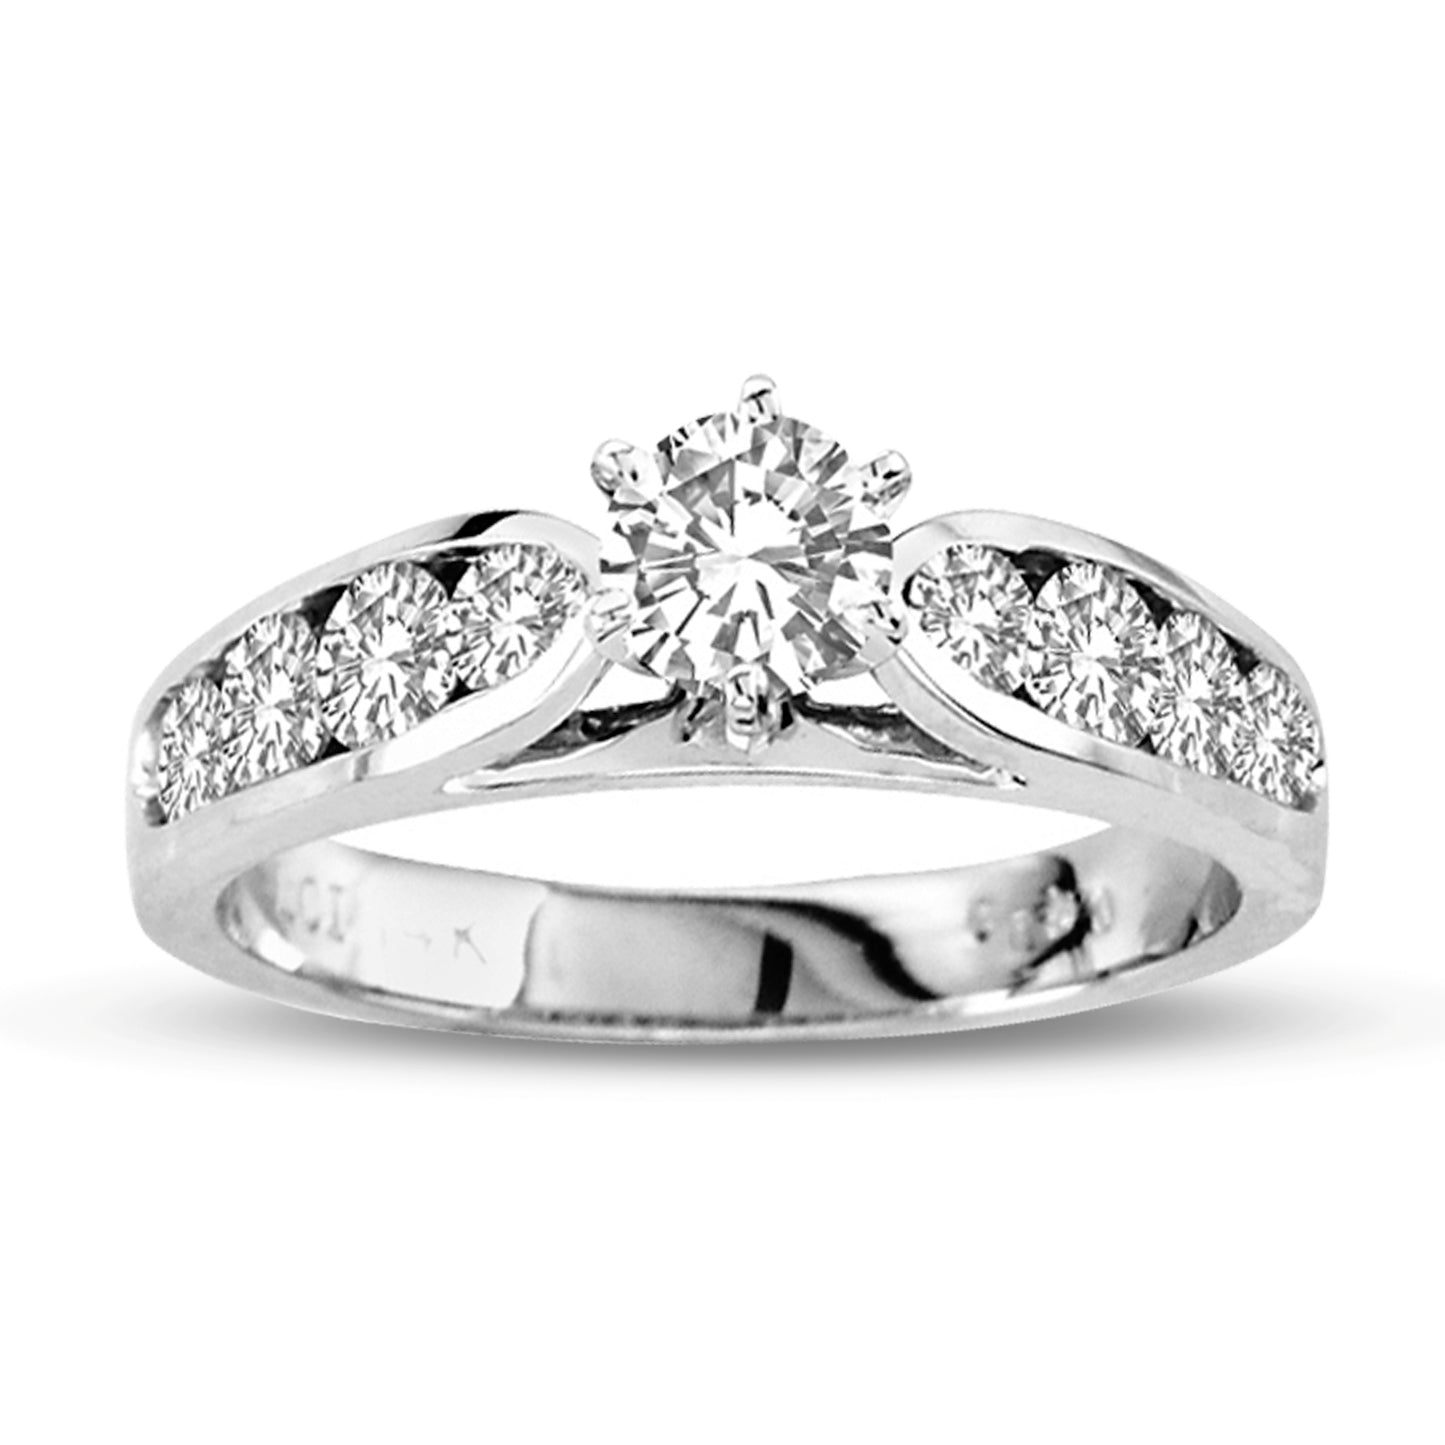 1 1/4ct Diamond Engagement Ring in 14k White Gold